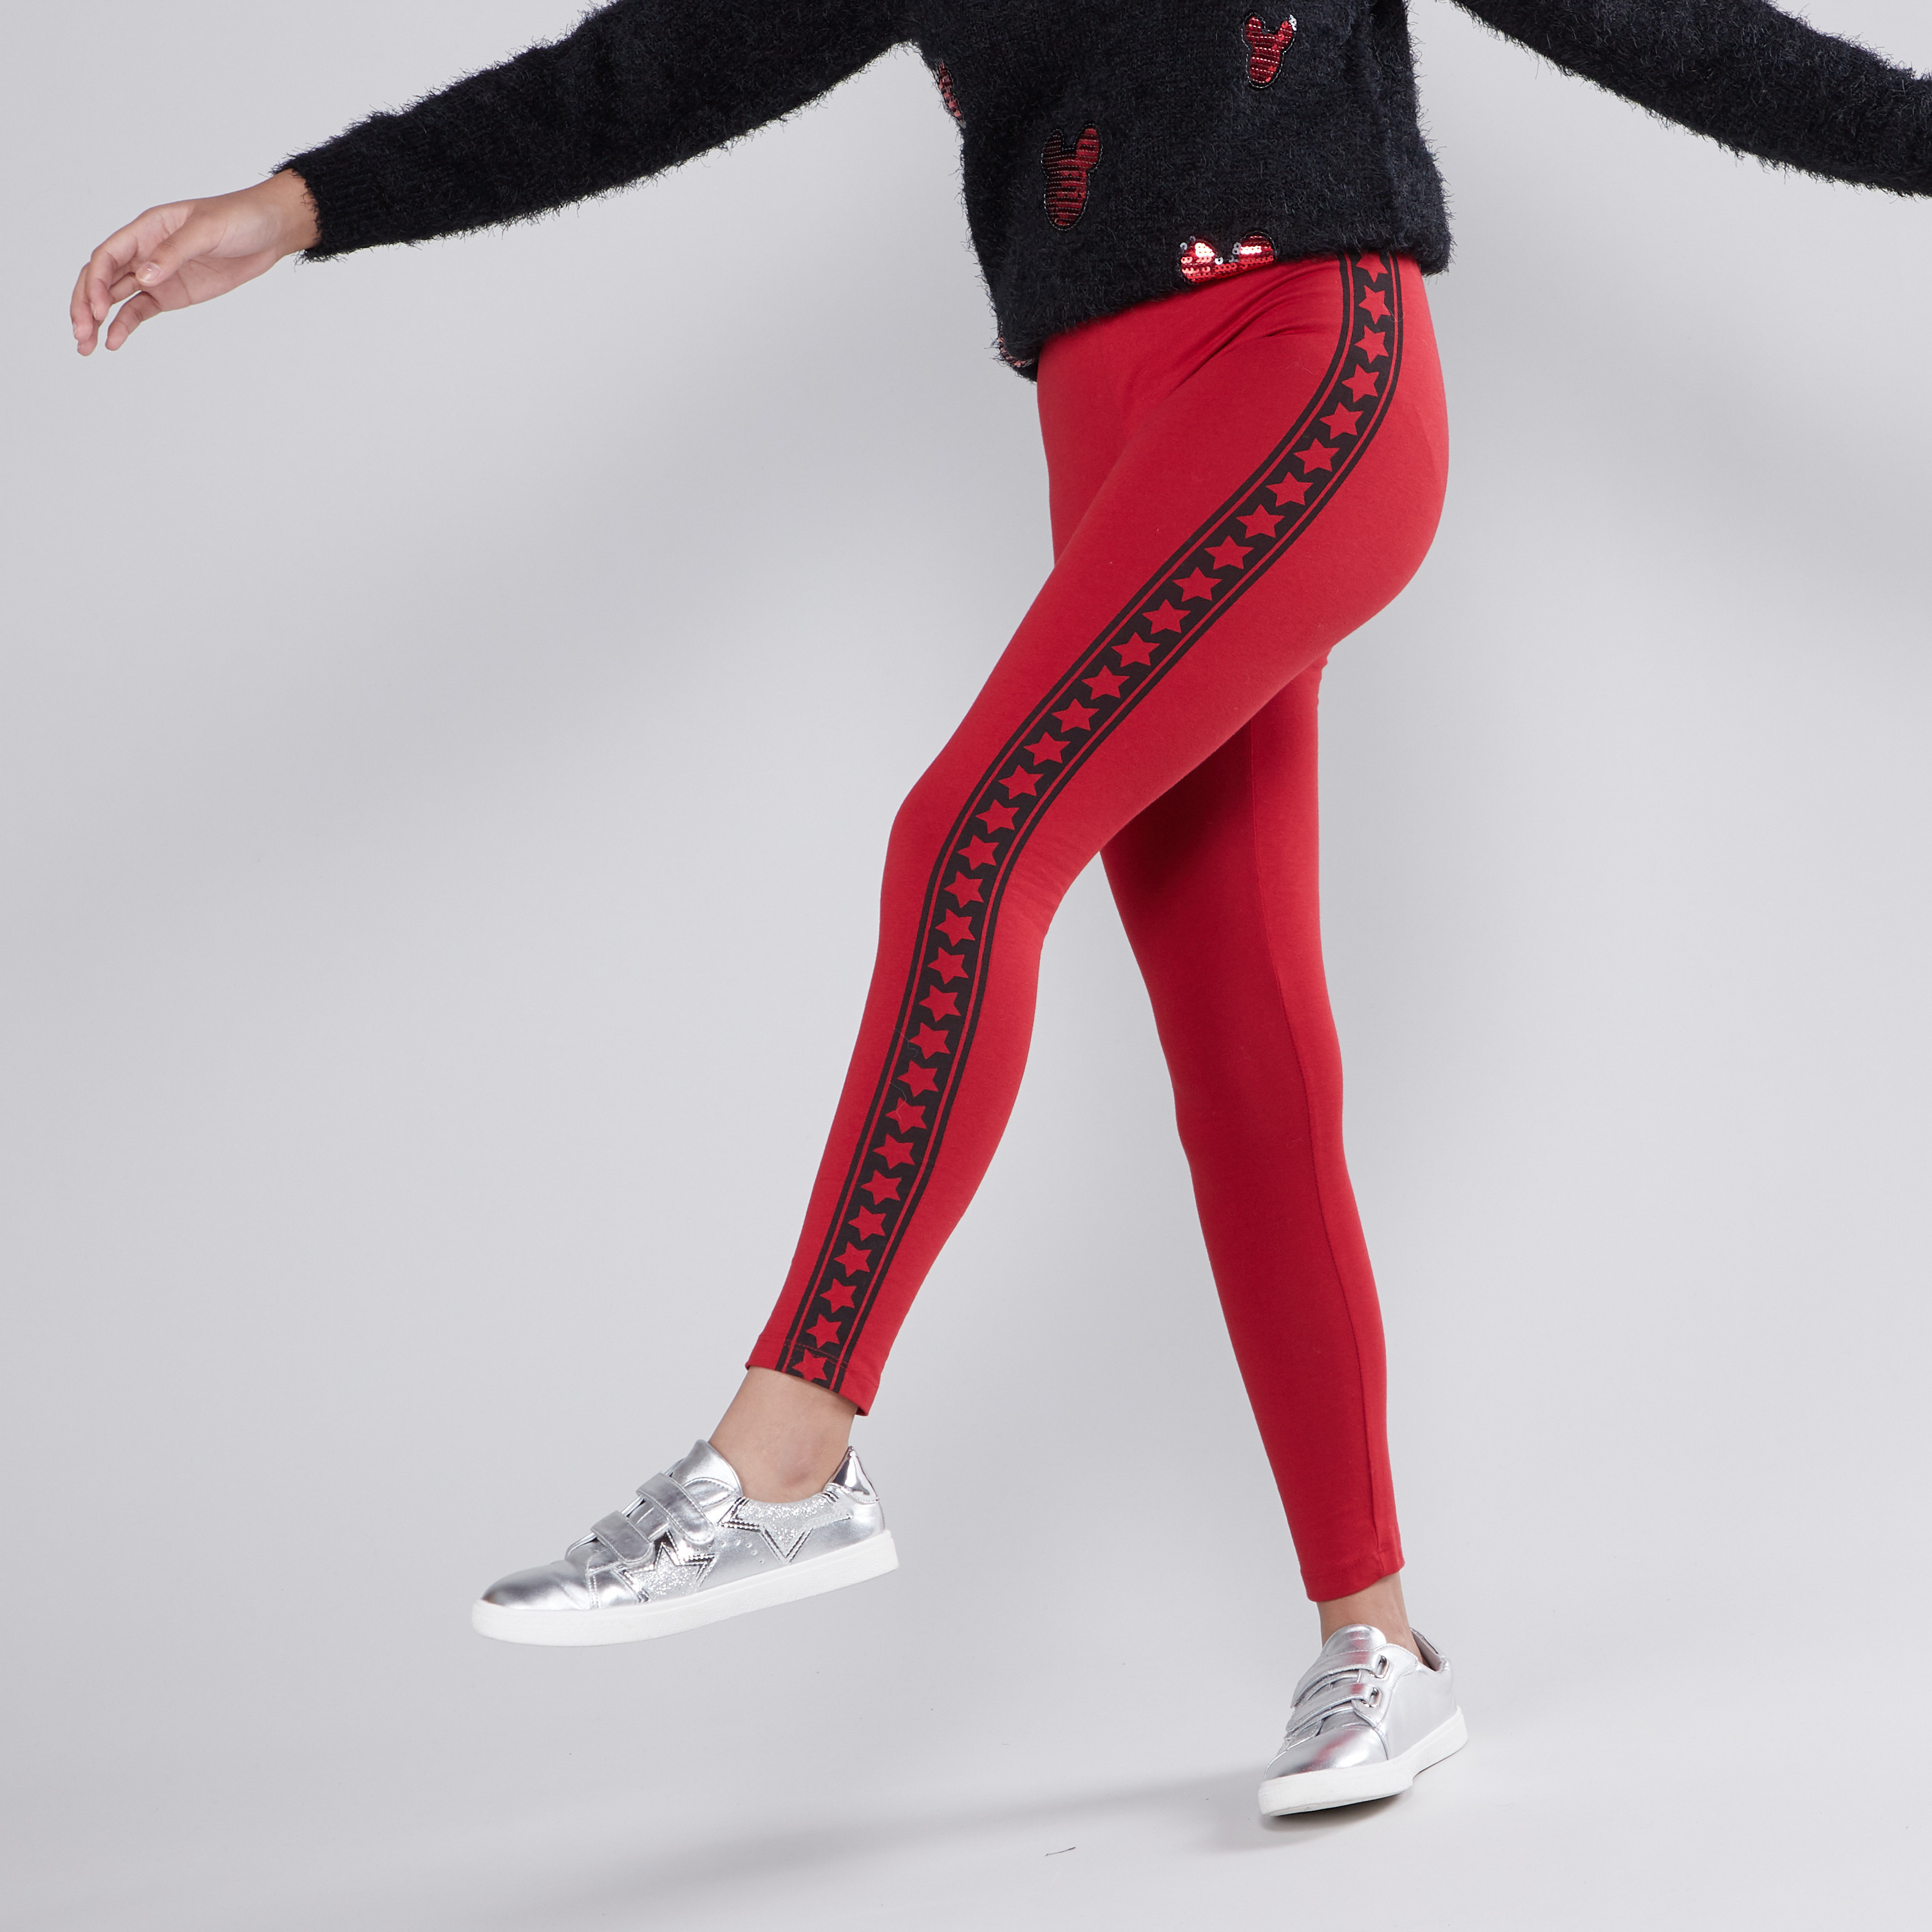 Buy Poly Deluxe Pocket Womens plus size leggings Leopard print Sizes 22-30  Online